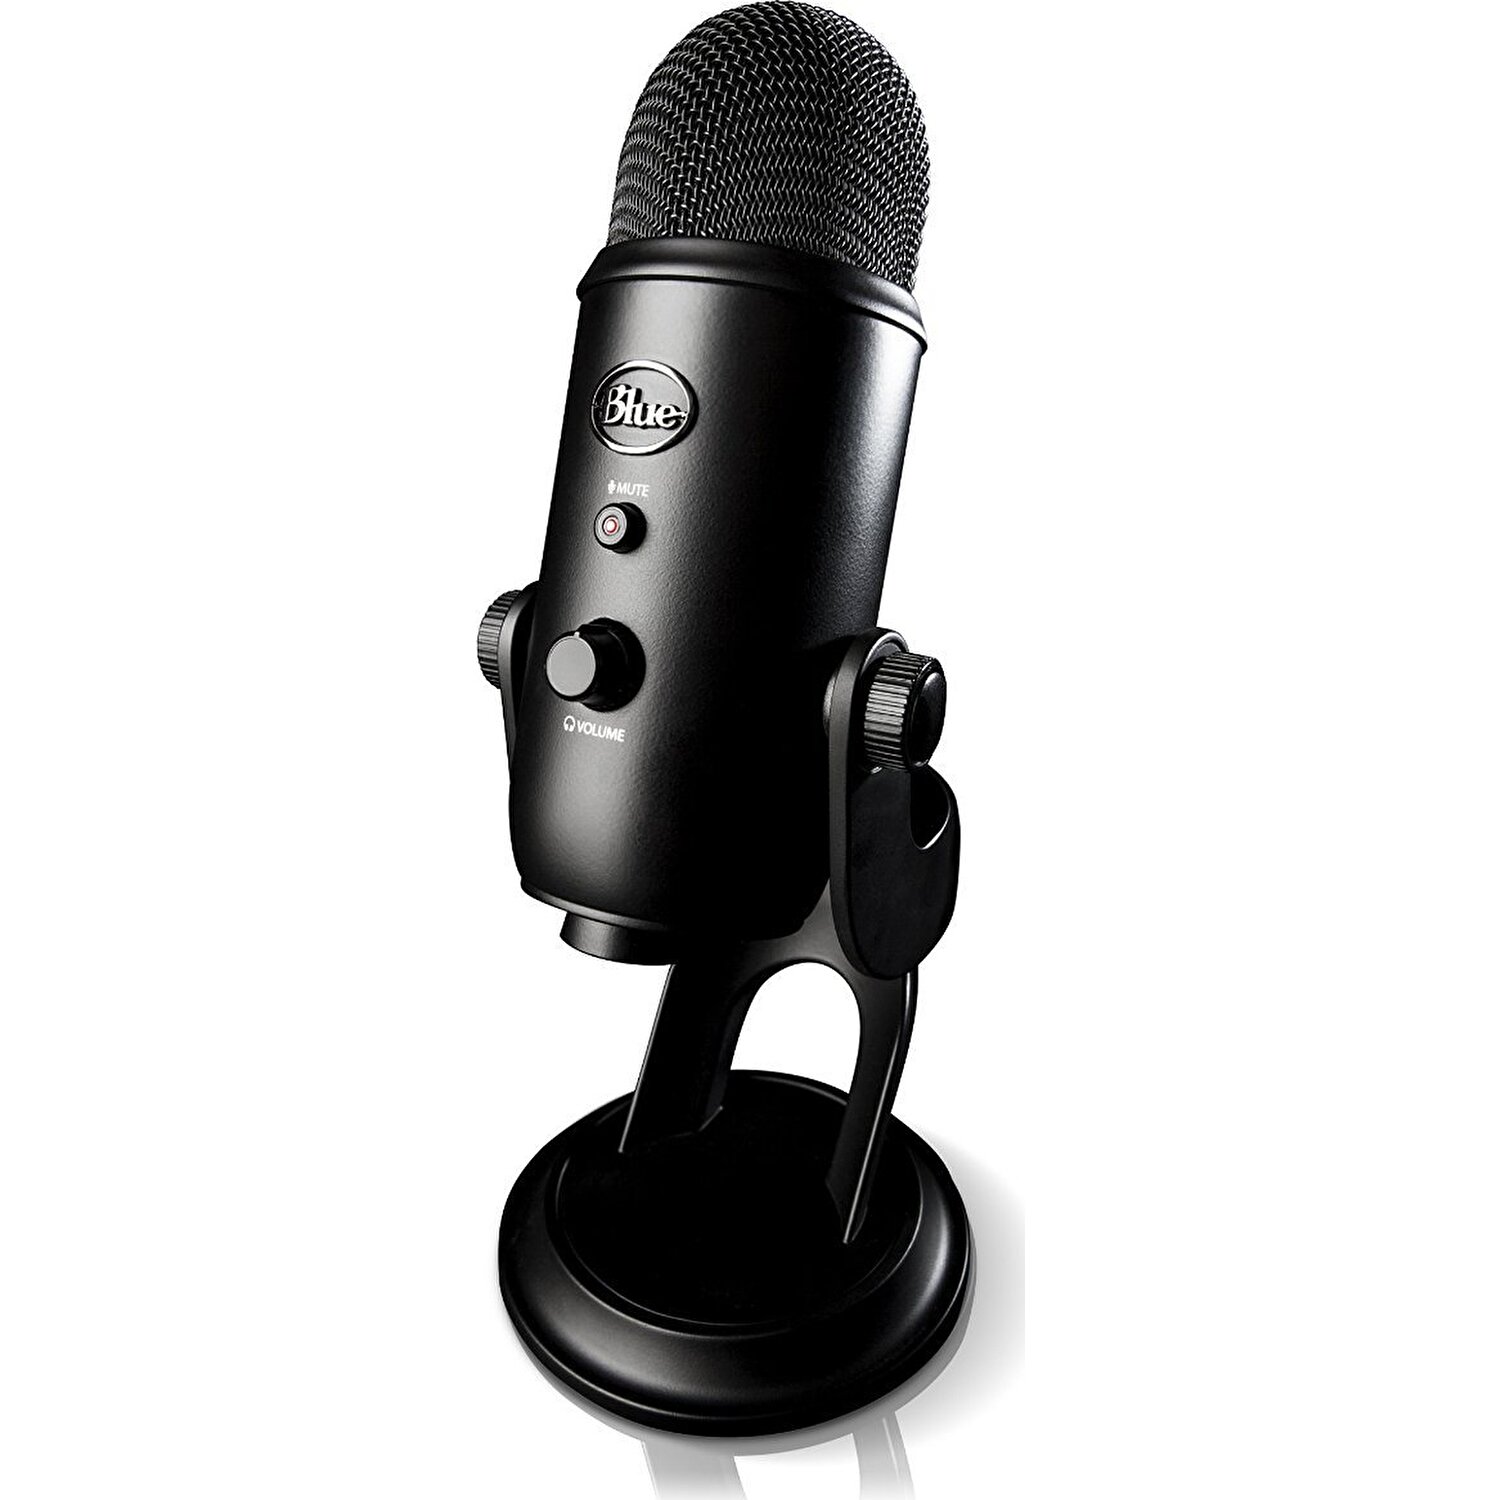 Blue Yeti Usb Microphone Blackout Siyah Mikrofon Fiyati